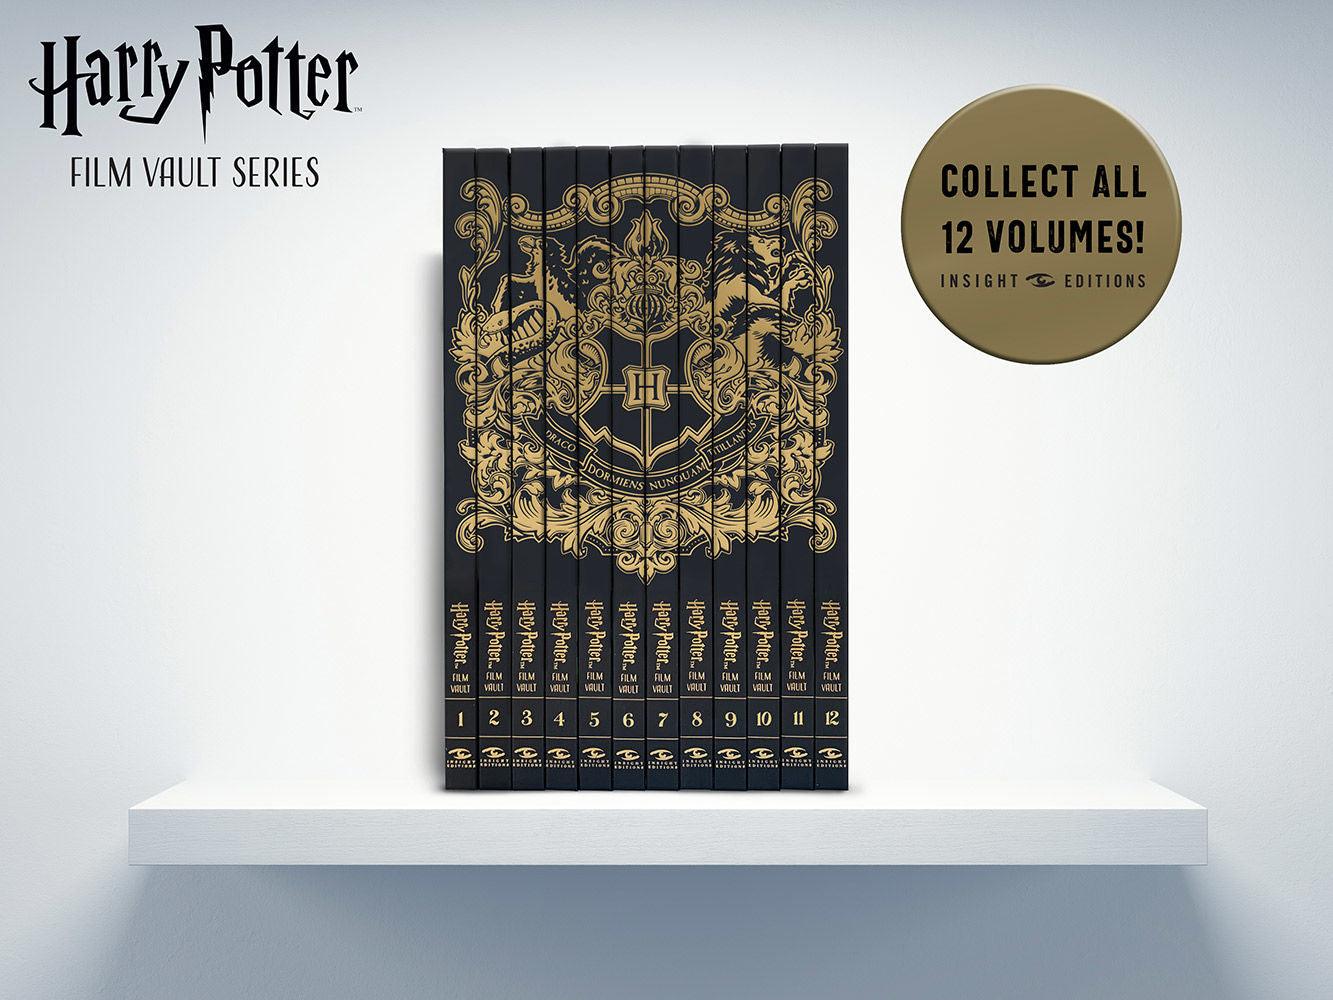 INS909713 Harry Potter - Film Vault: The Complete Series Hardcover Book (Box Set) - Insight Editions - Titan Pop Culture